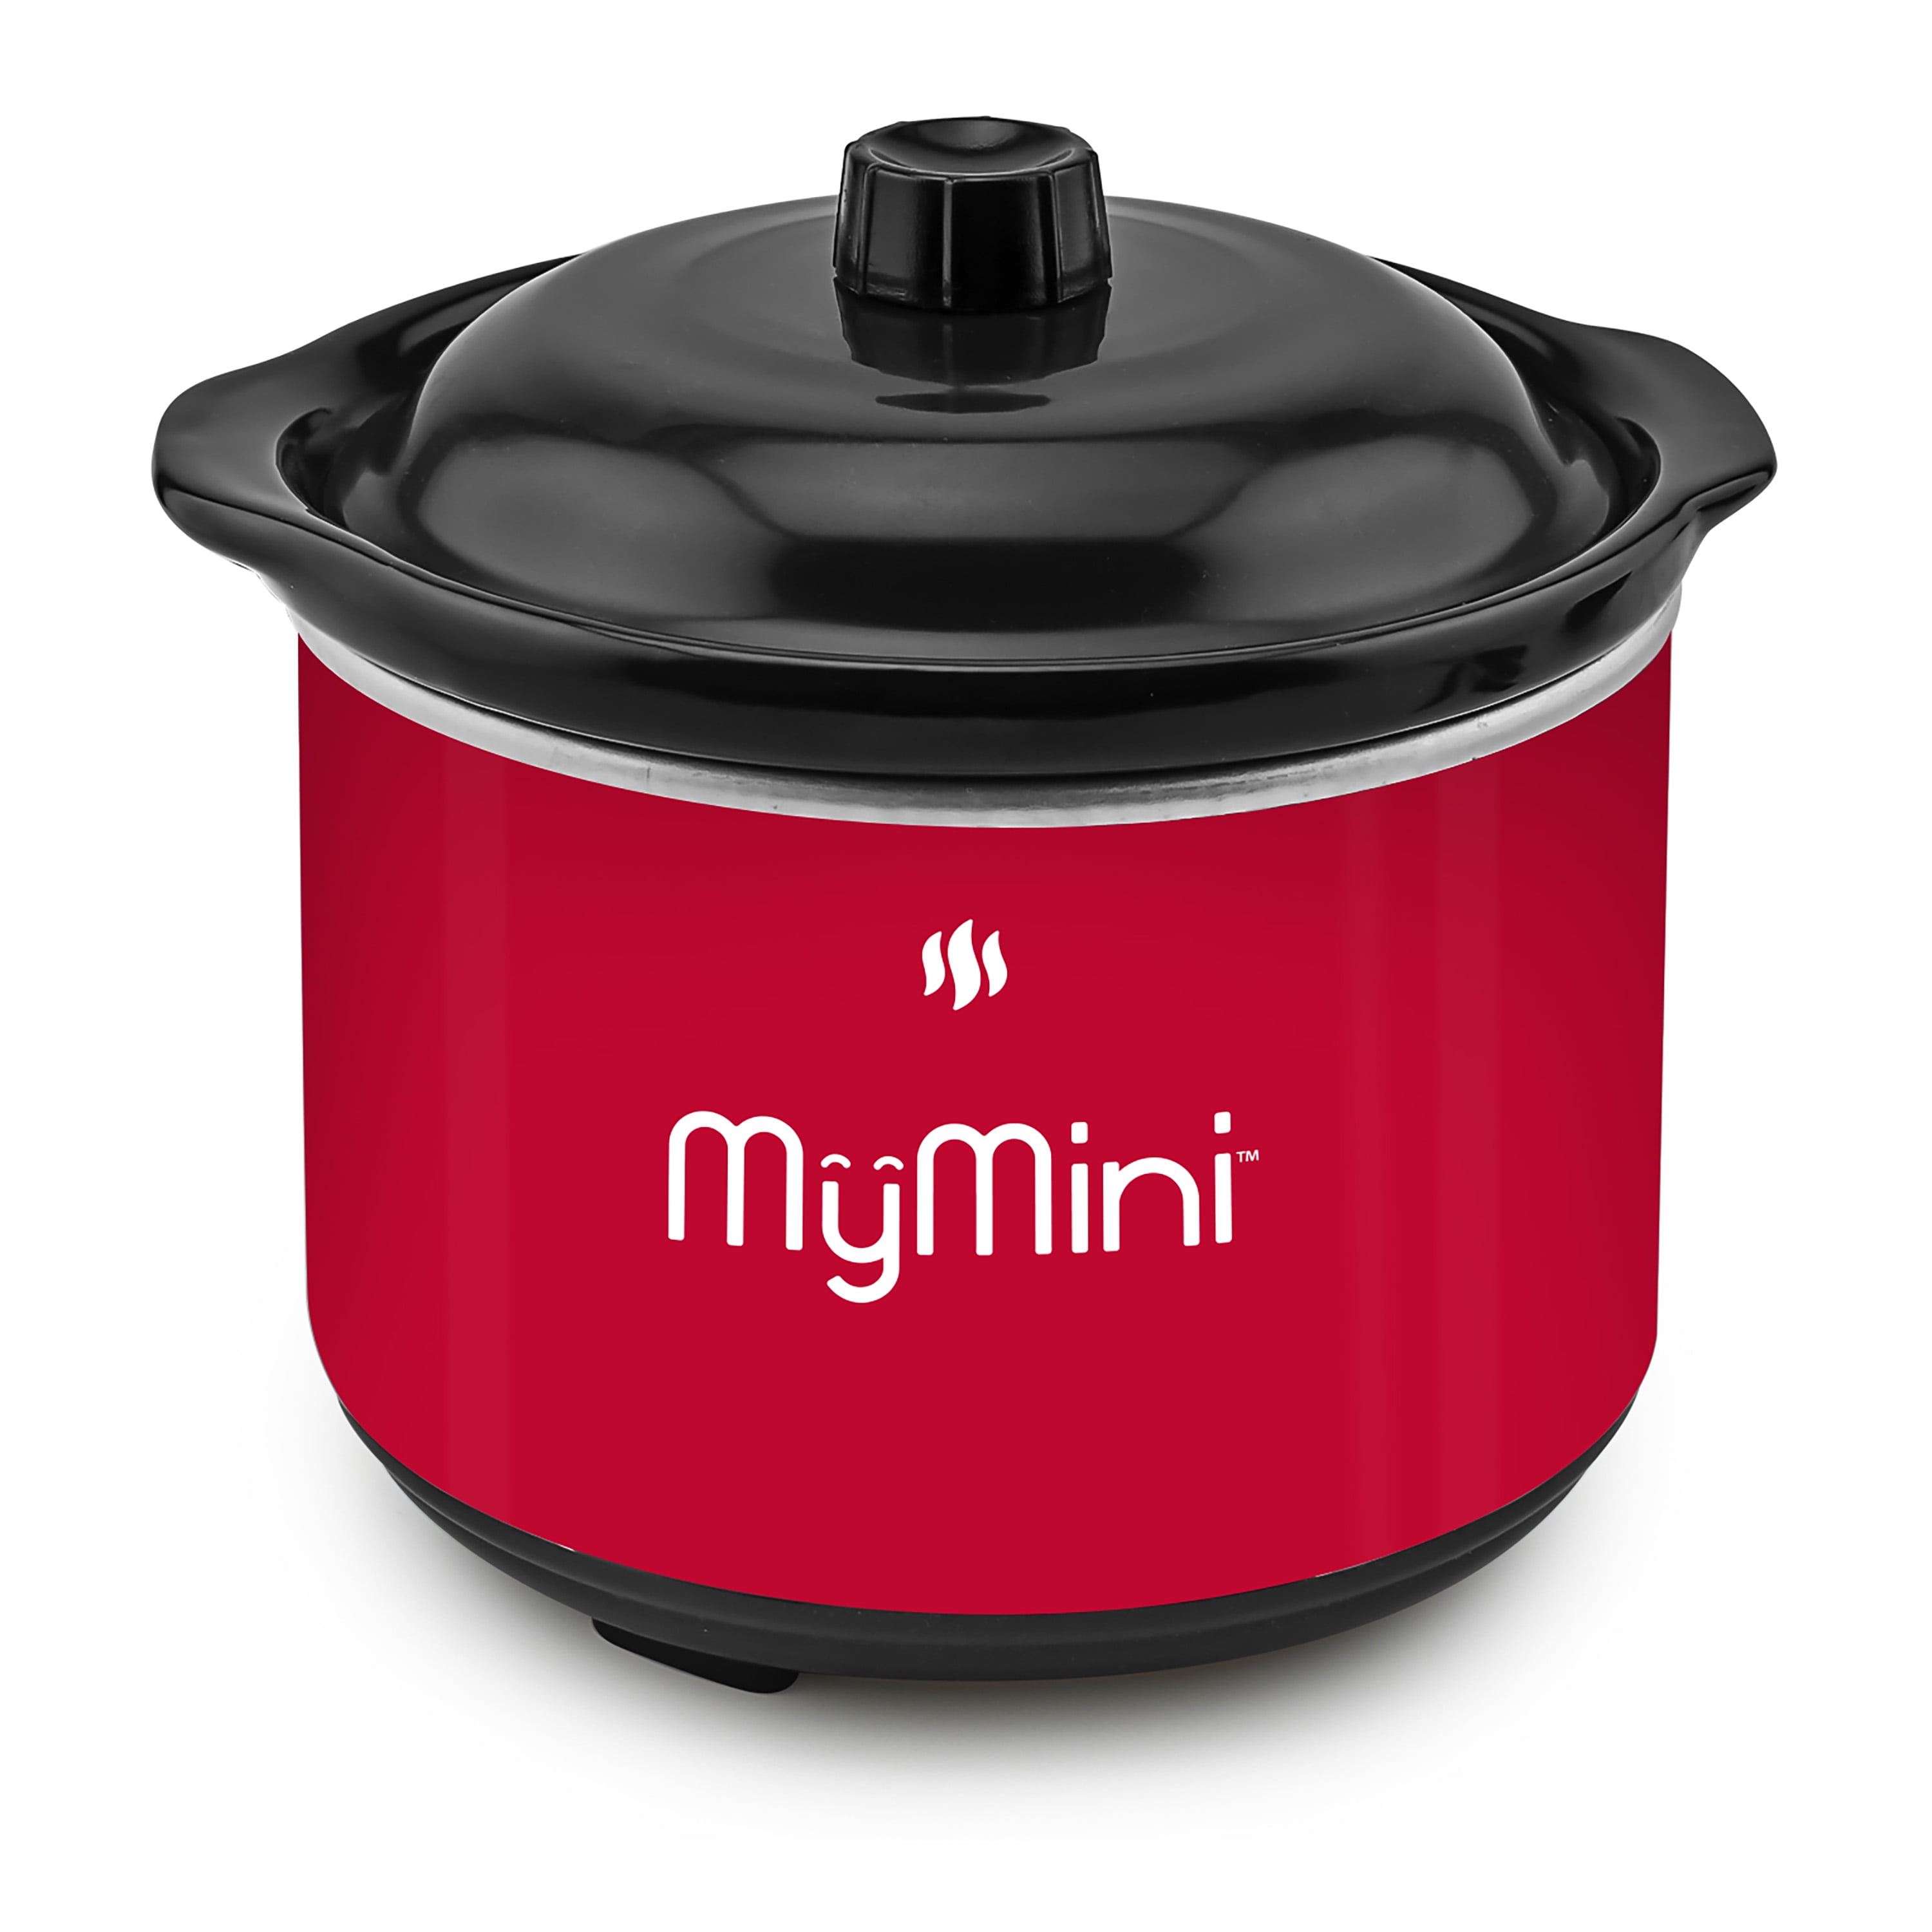 MyMini Dipping Pot Food Warmer, Red (5.9 inch x 5.9 inch, 2.4lb)